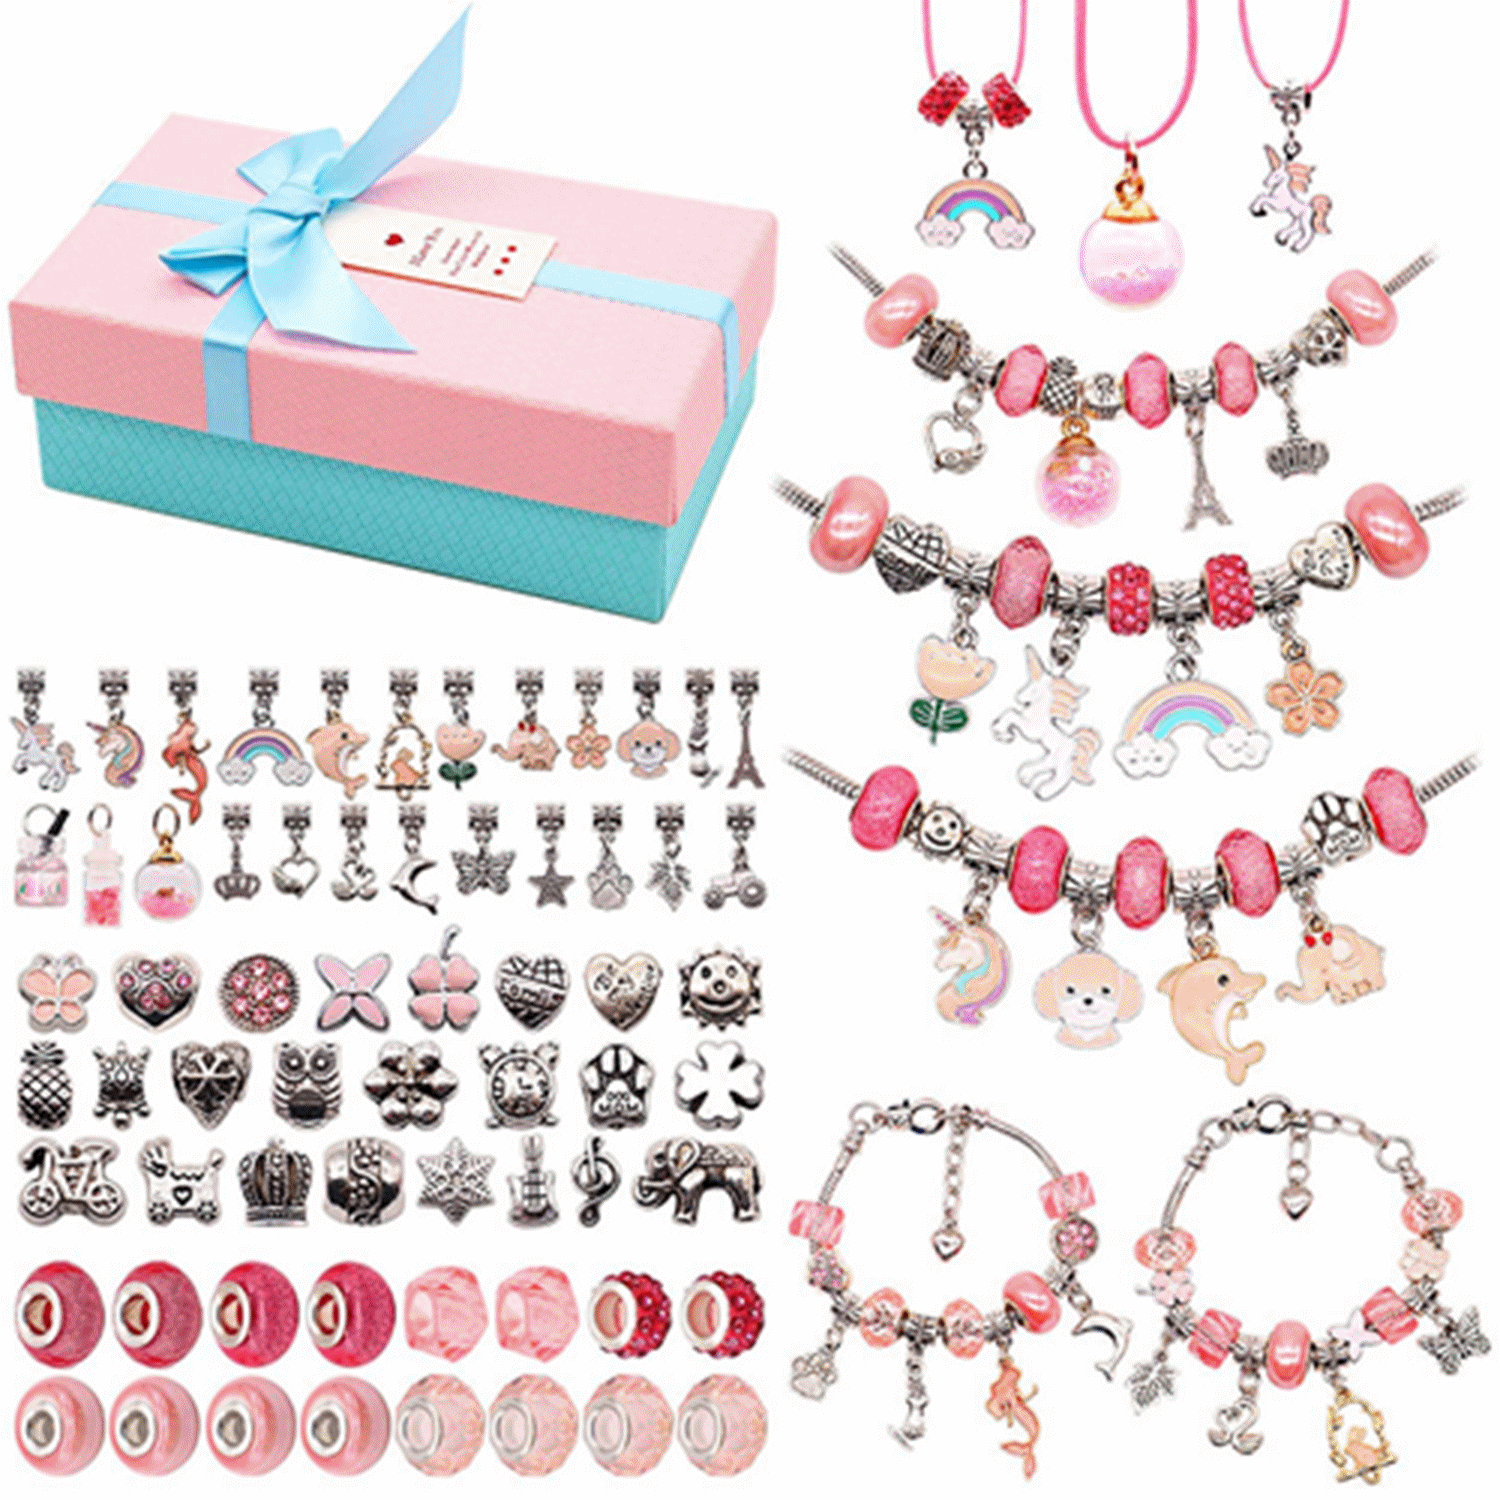 180Pcs Girls Kids DIY Bracelet Arts Craft Beads Jewelry Making Set Box Gift 